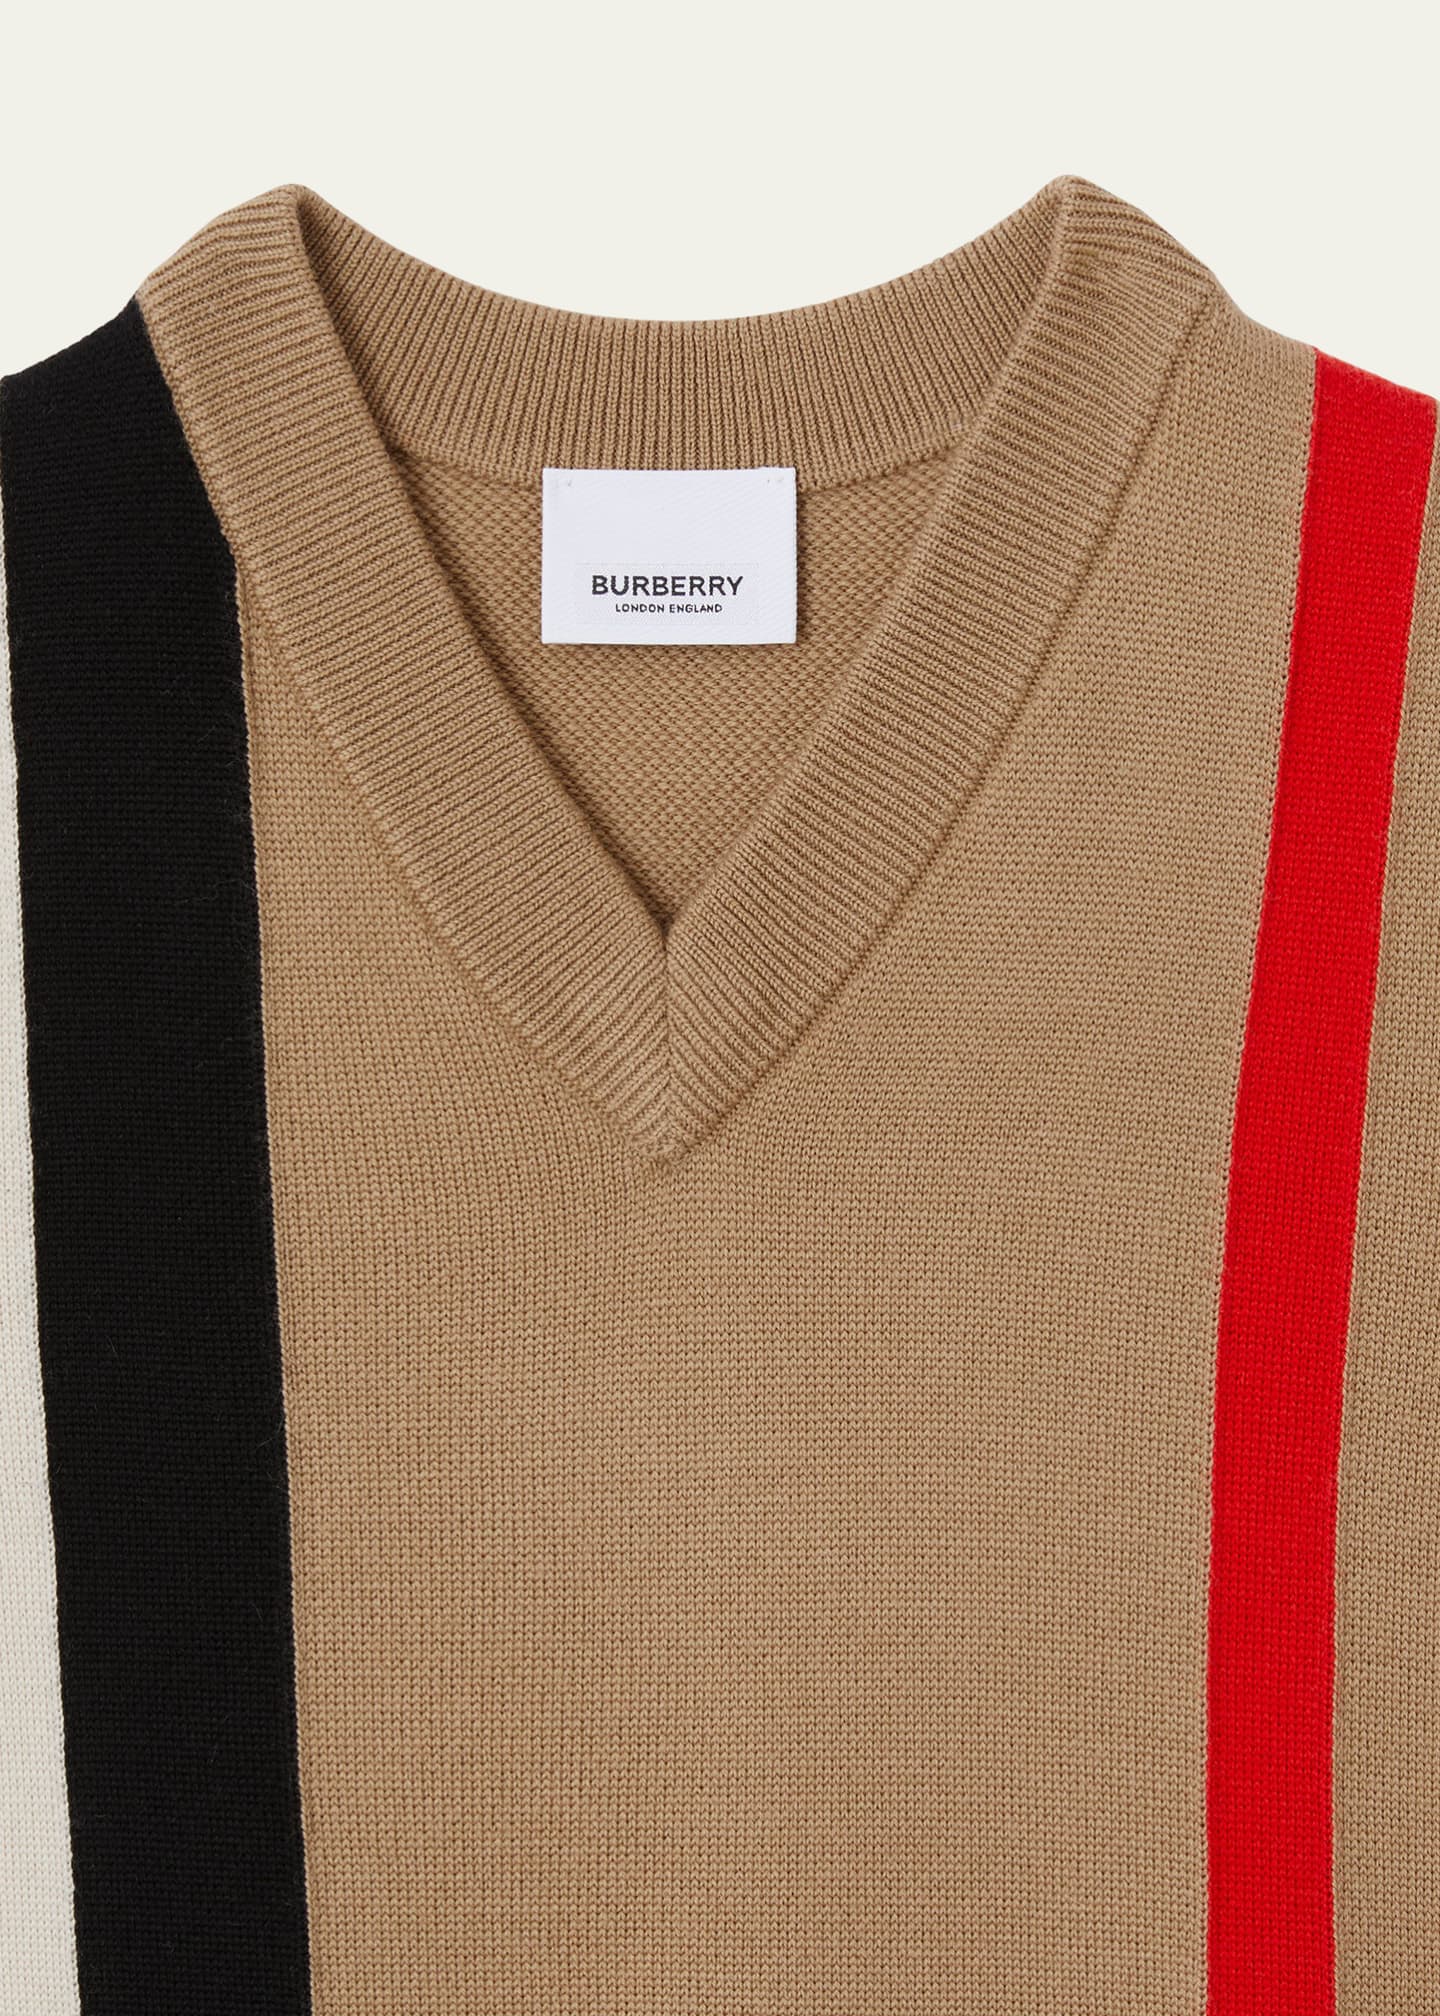 Burberry Boy's Dustin Sweater Vest, Size 3-14 - Bergdorf Goodman